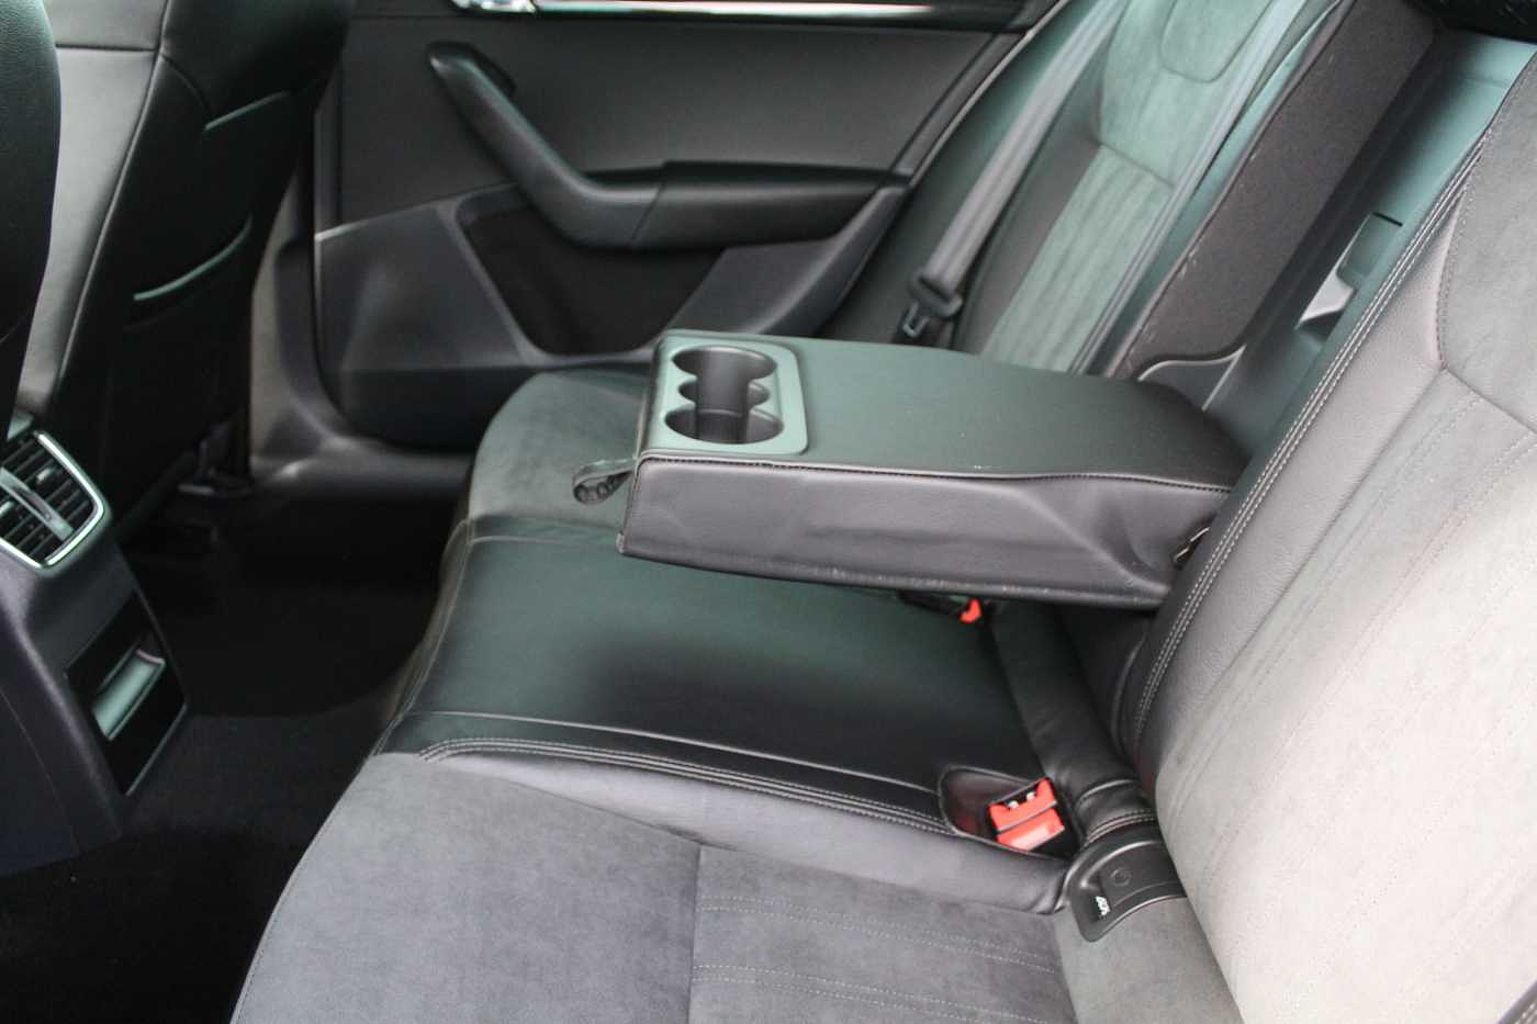 SKODA Octavia Hatchback 1.6 TDI SE L (115 PS)